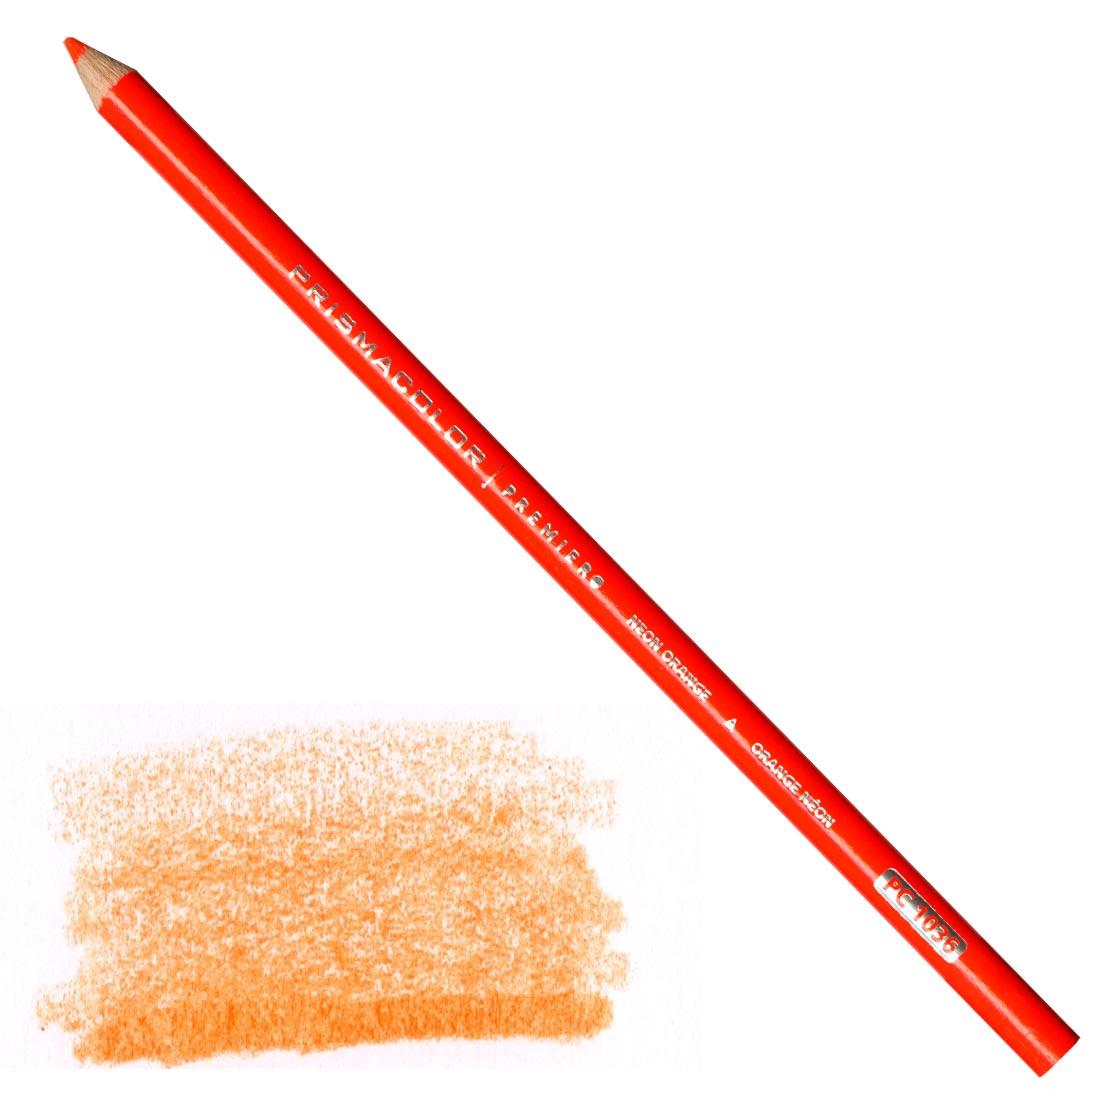 Neon Orange Prismacolor Premier Colored Pencil with a sample colored swatch